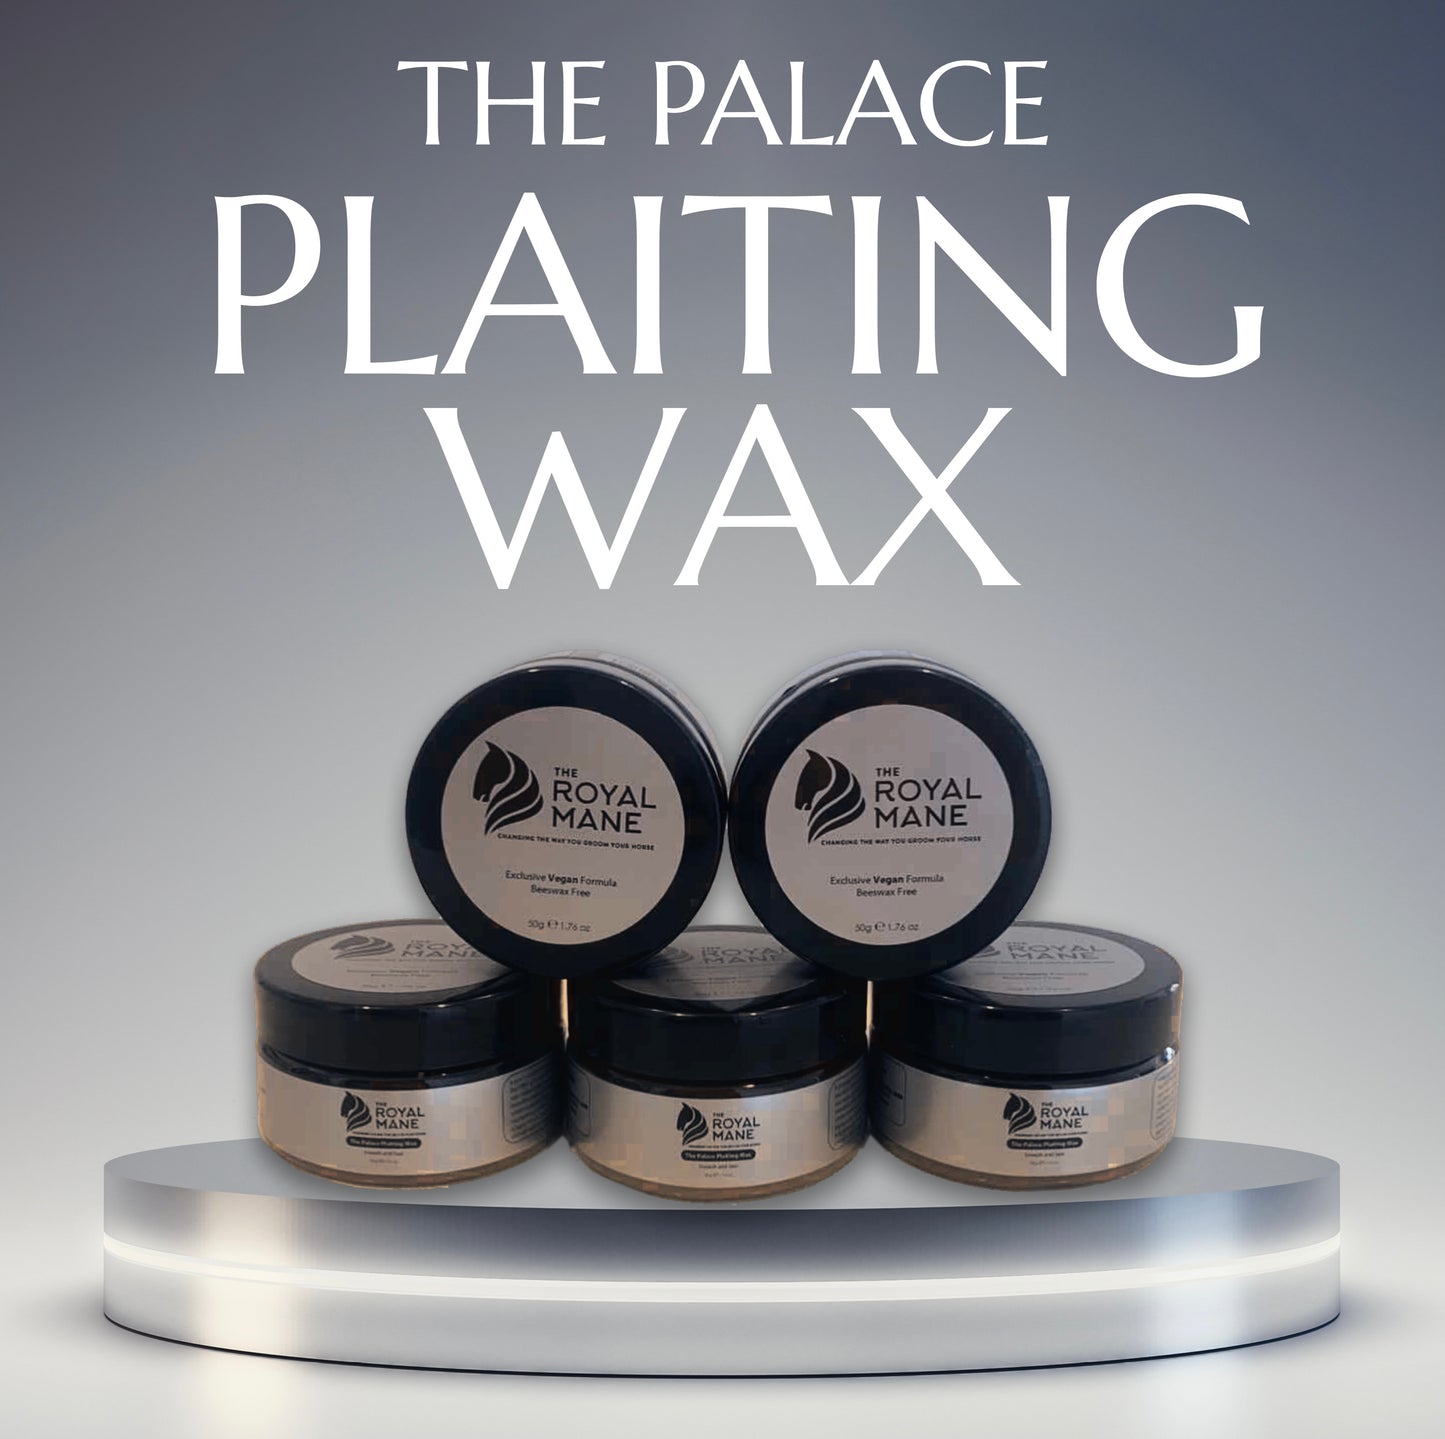 The Palace Plaiting Wax